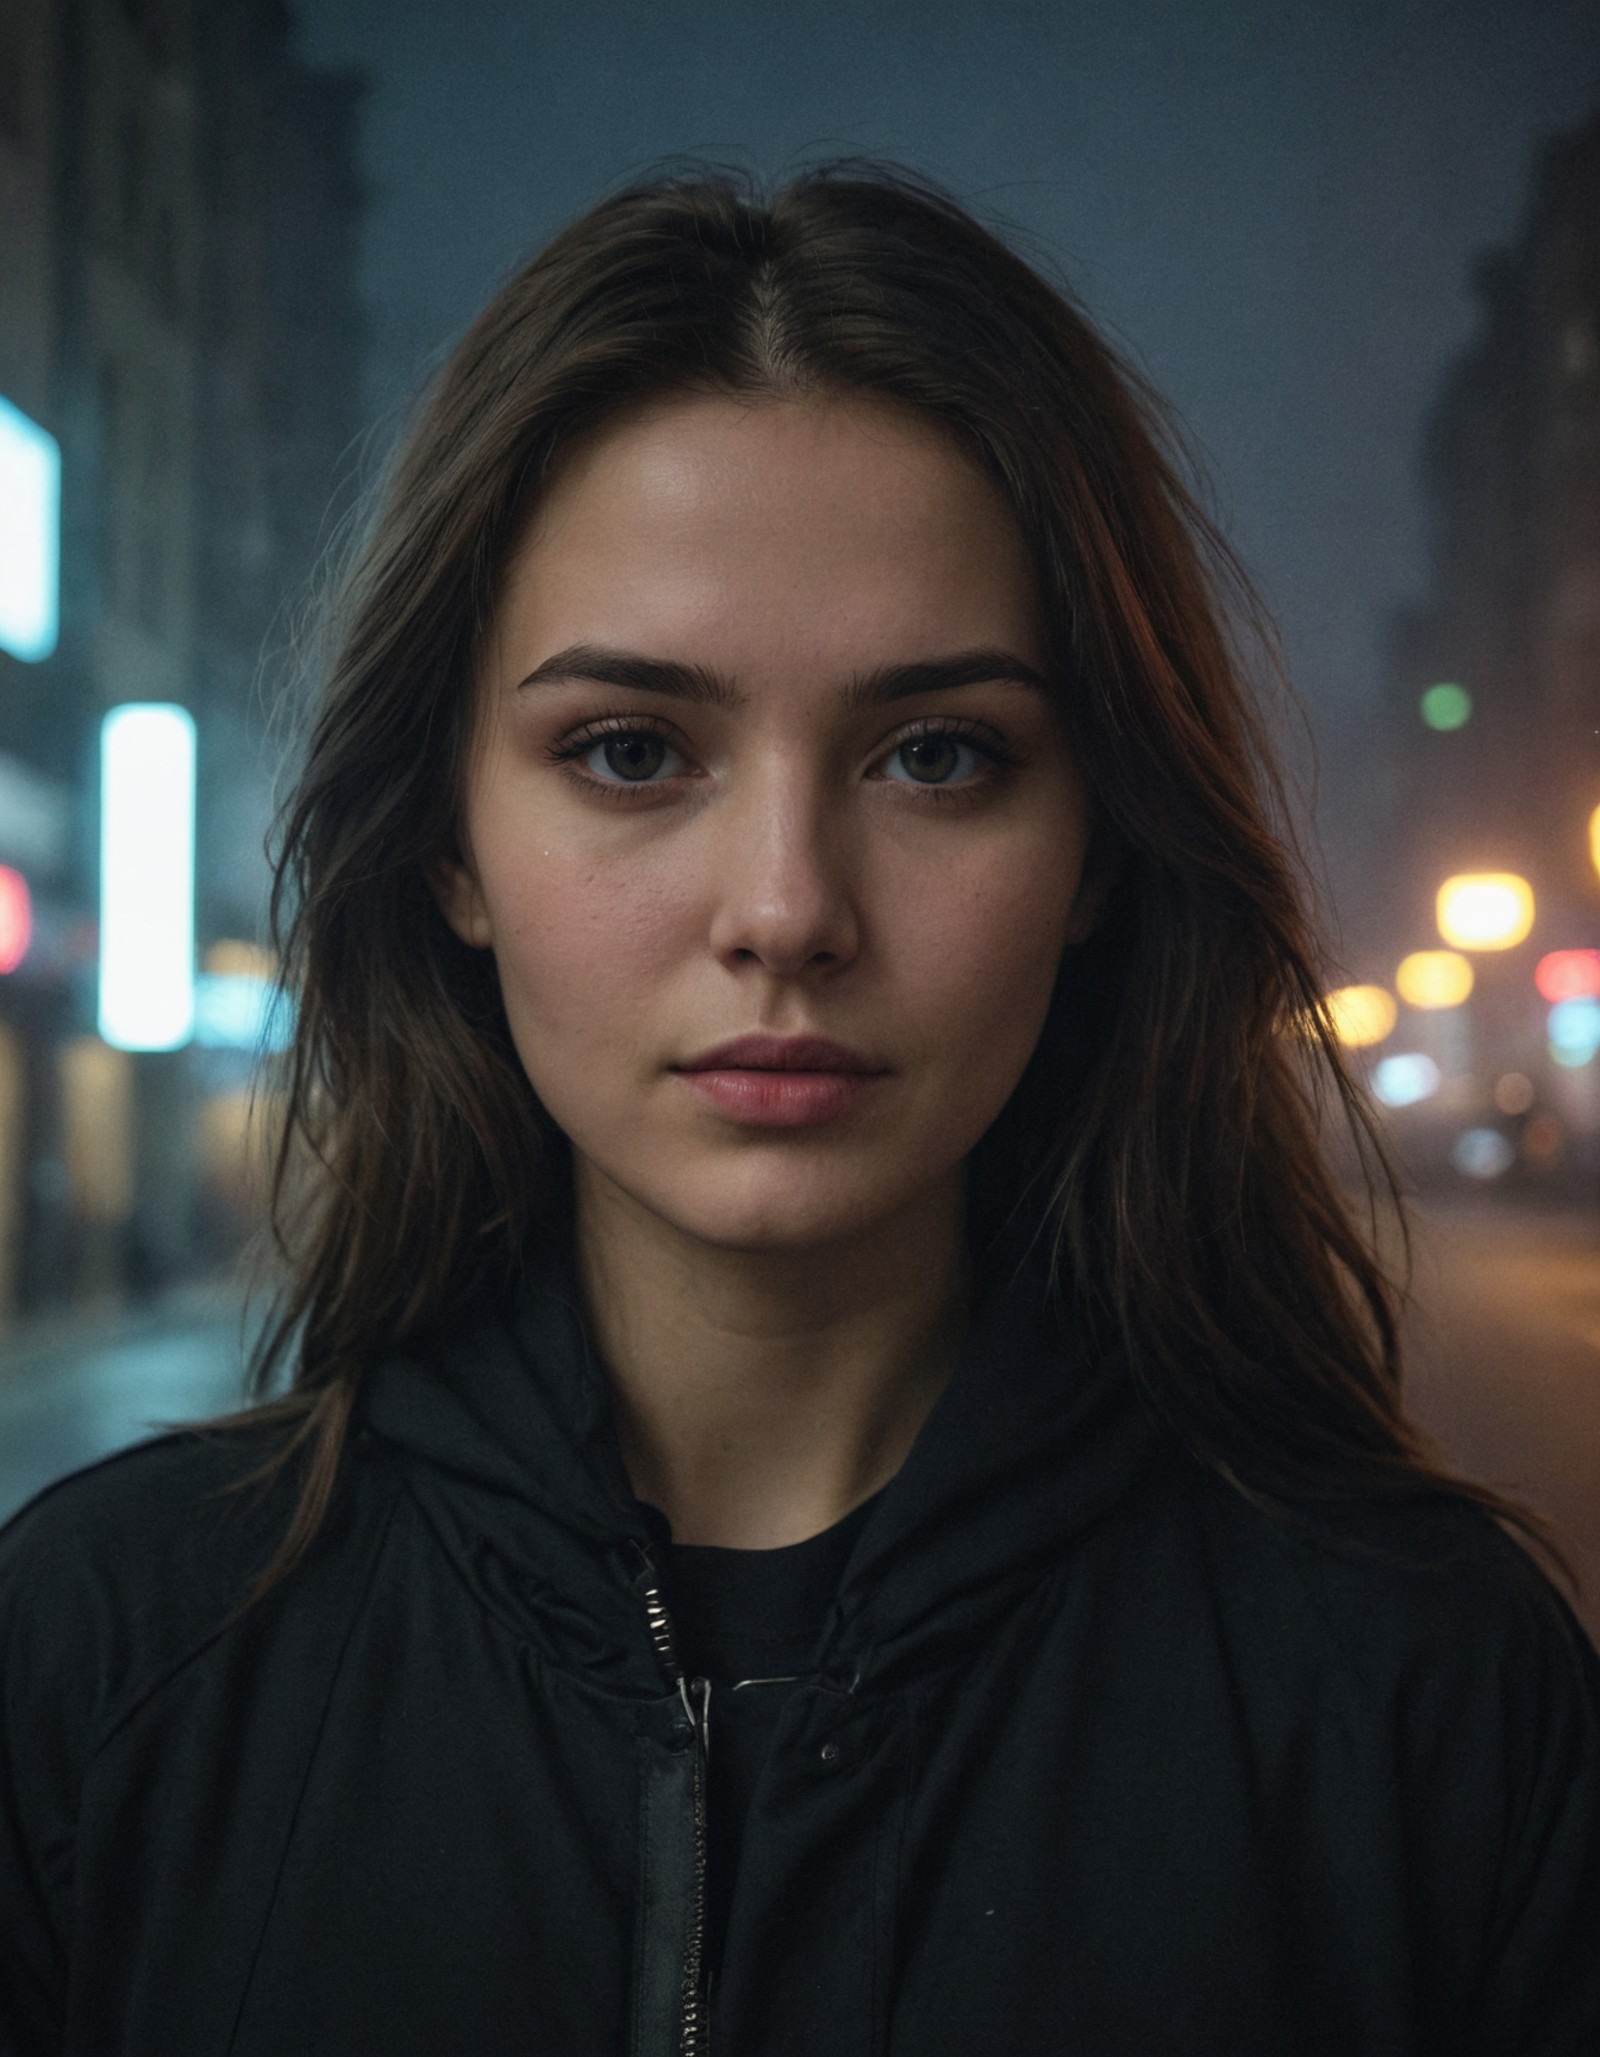 city street, neon, fog, volumetric, closeup portrait photo of young woman in dark clothes